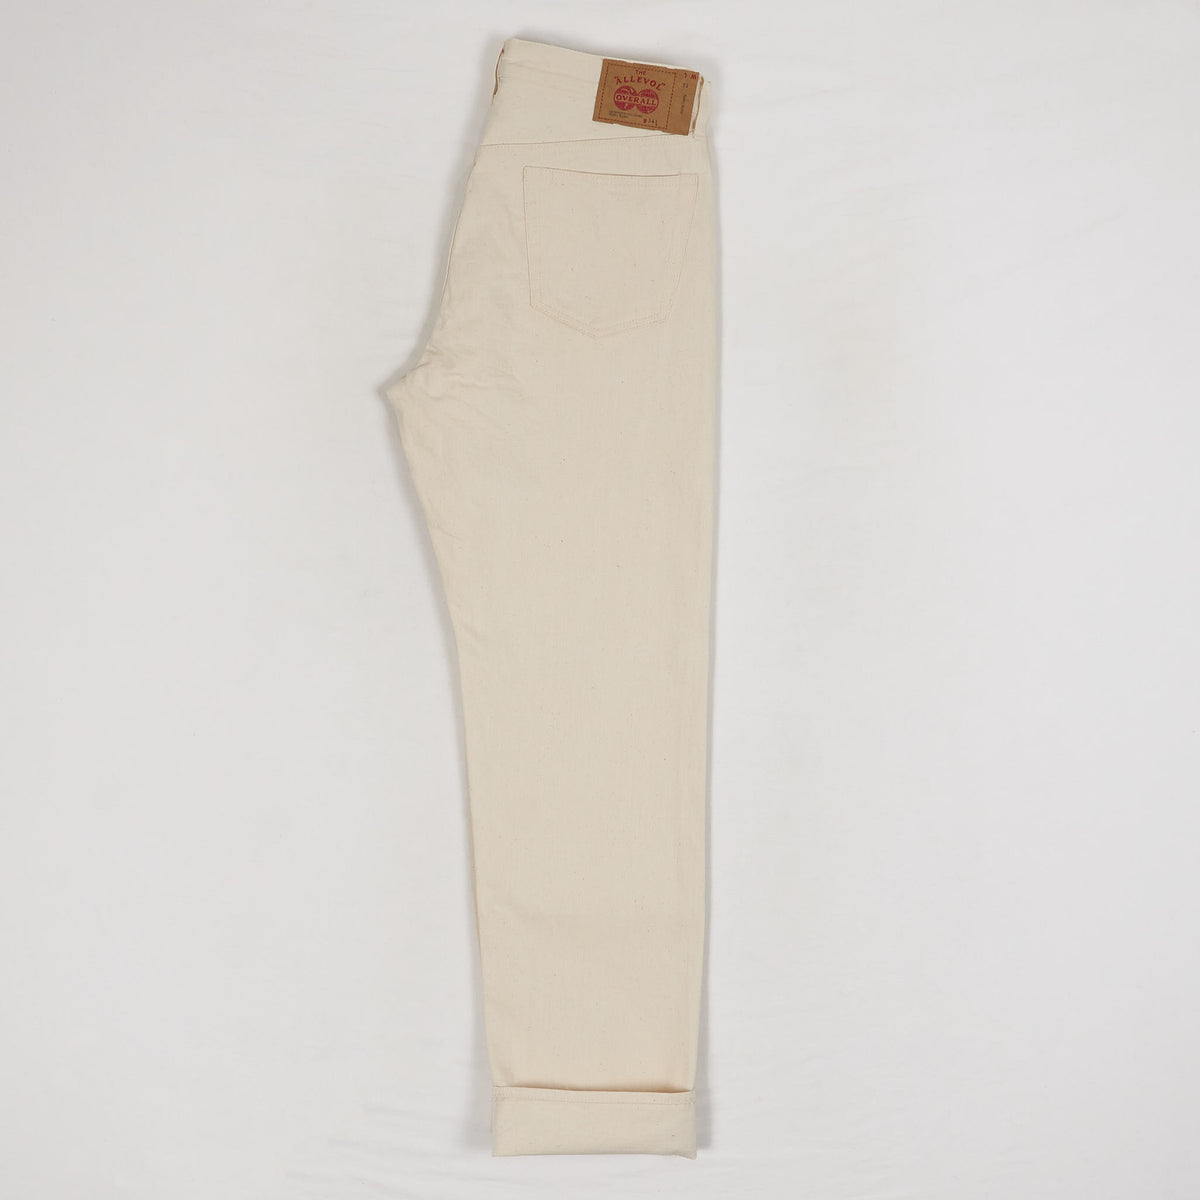 Allevol 5-Pocket Natural Straight Leg Selvage 5 Pocket Jeans